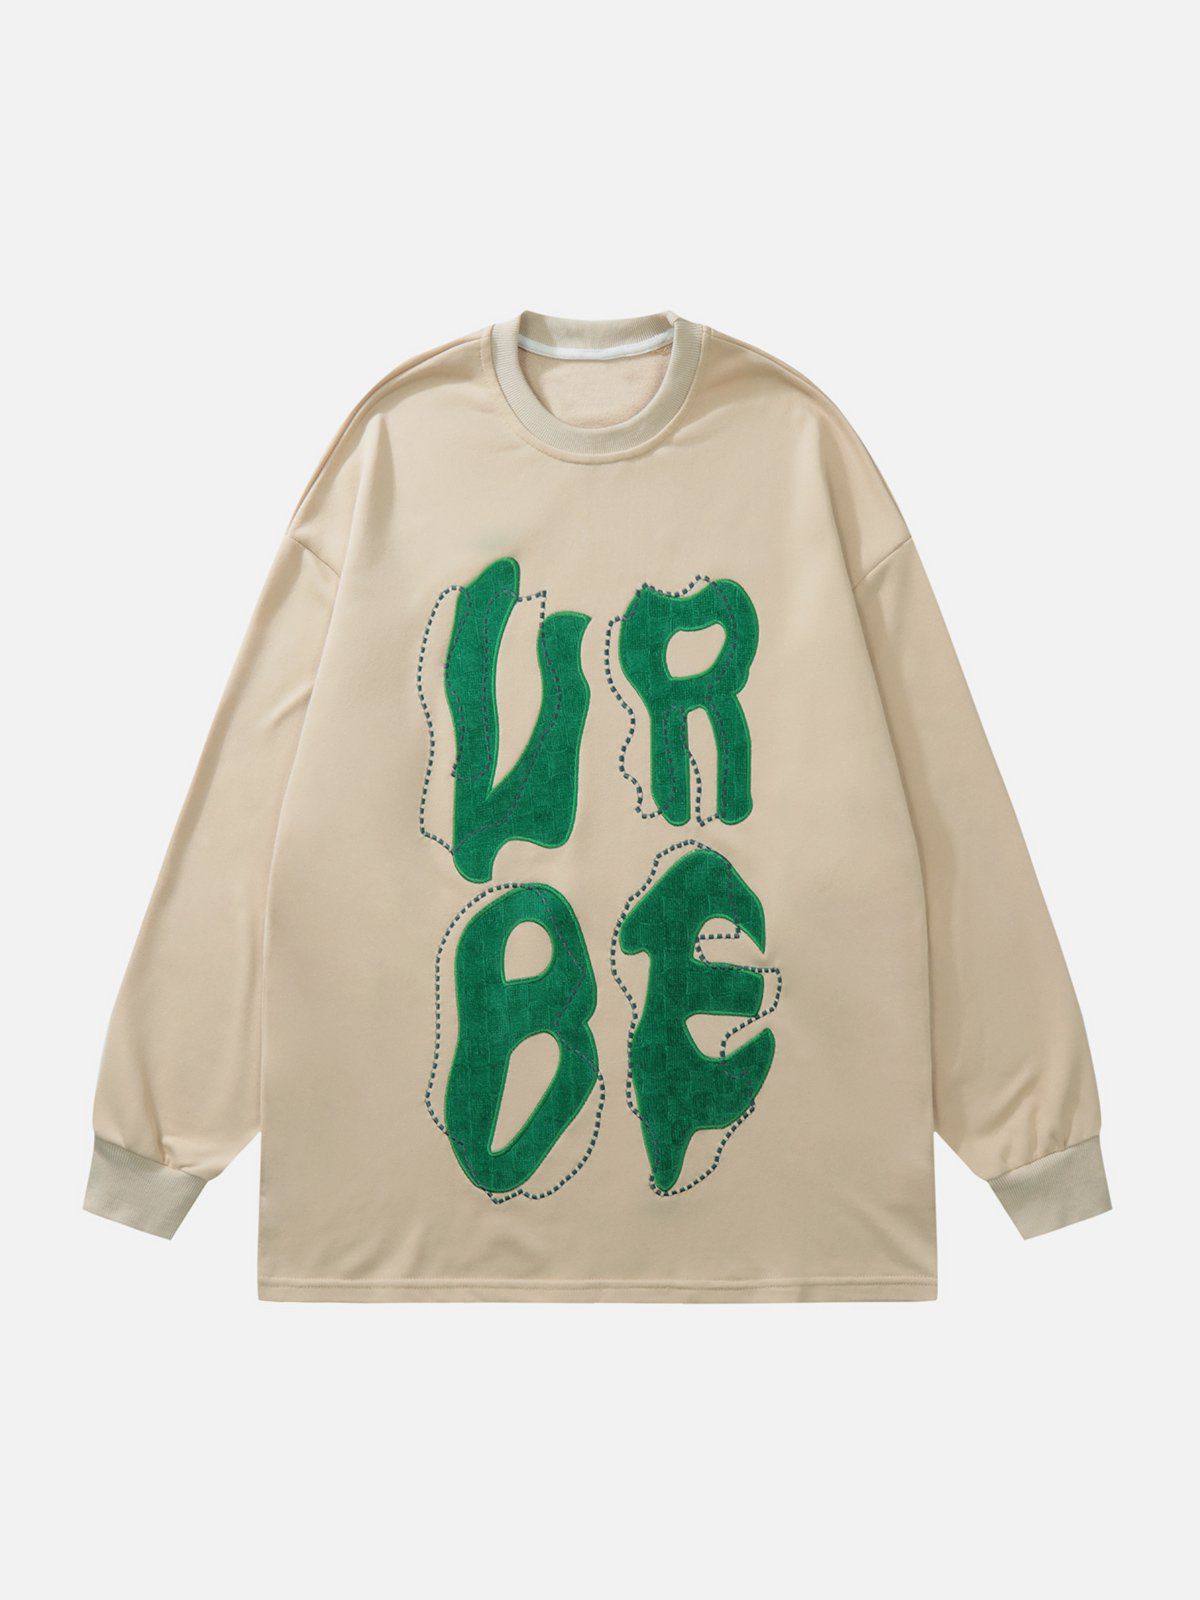 LUXENFY™ - "URBE” Print Sweatshirt luxenfy.com